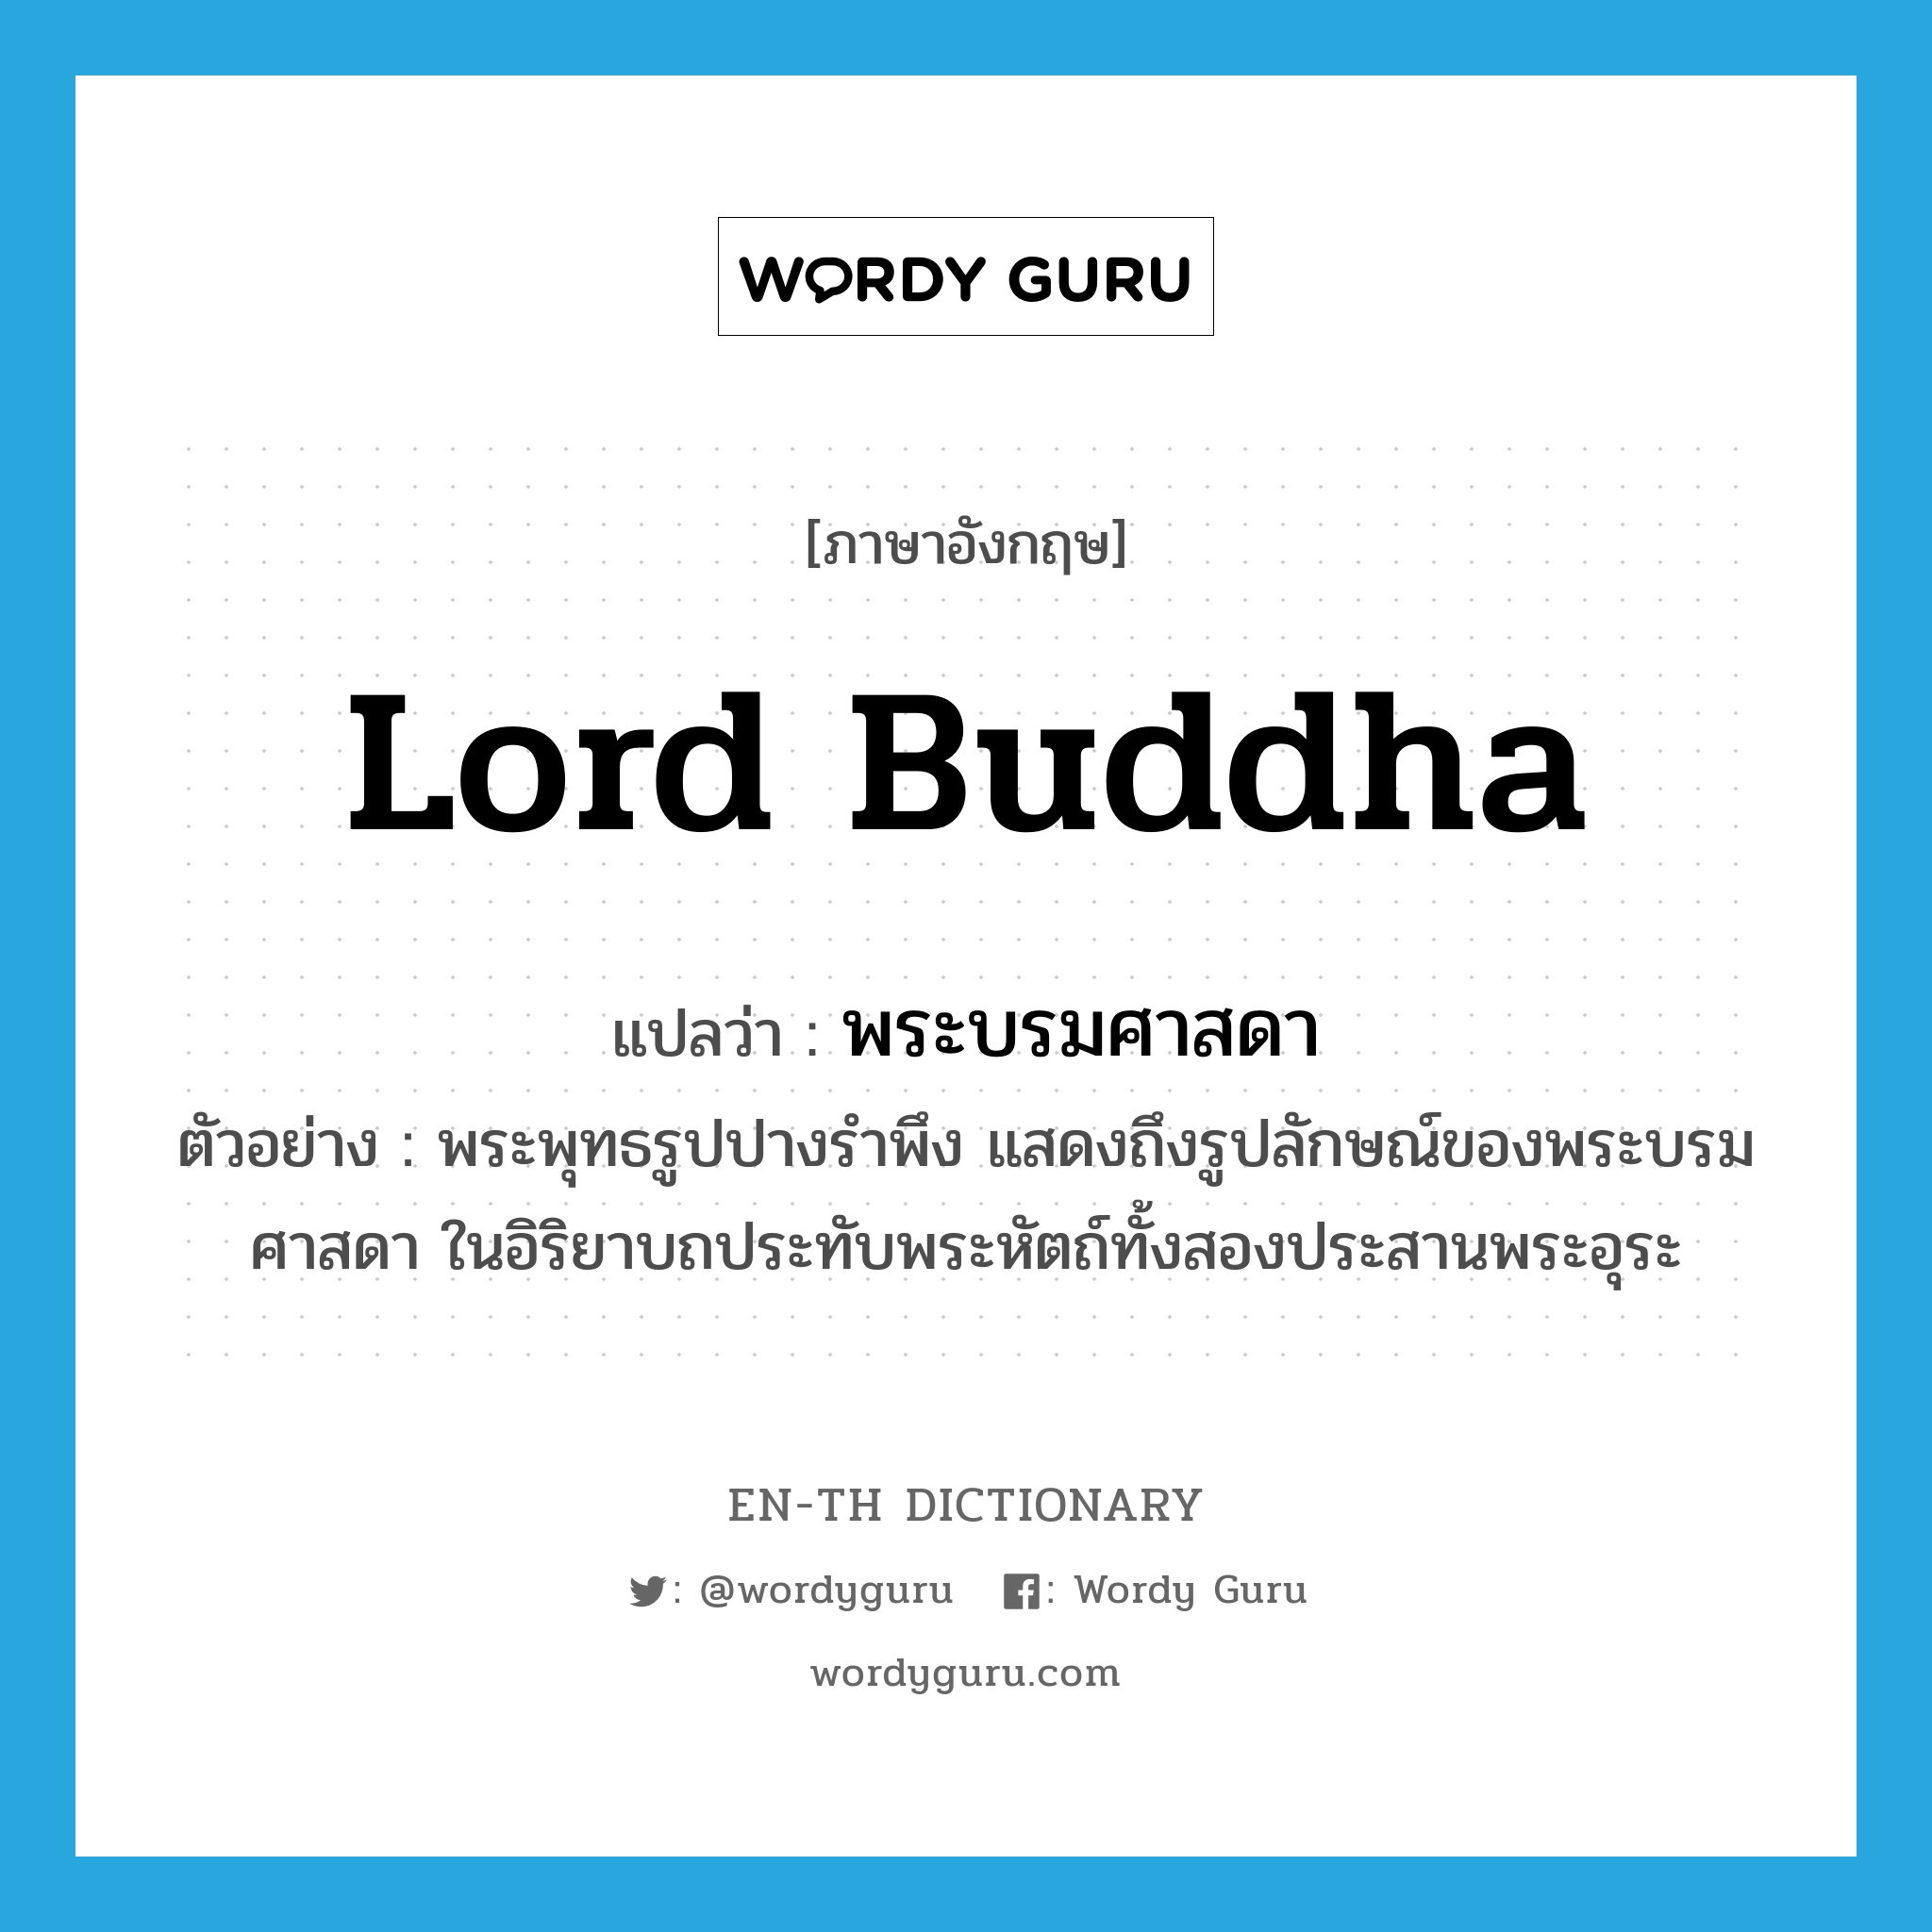 Lord Buddha แปลว่า?, คำศัพท์ภาษาอังกฤษ Lord Buddha แปลว่า พระบรมศาสดา ประเภท N ตัวอย่าง พระพุทธรูปปางรำพึง แสดงถึงรูปลักษณ์ของพระบรมศาสดา ในอิริยาบถประทับพระหัตถ์ทั้งสองประสานพระอุระ หมวด N